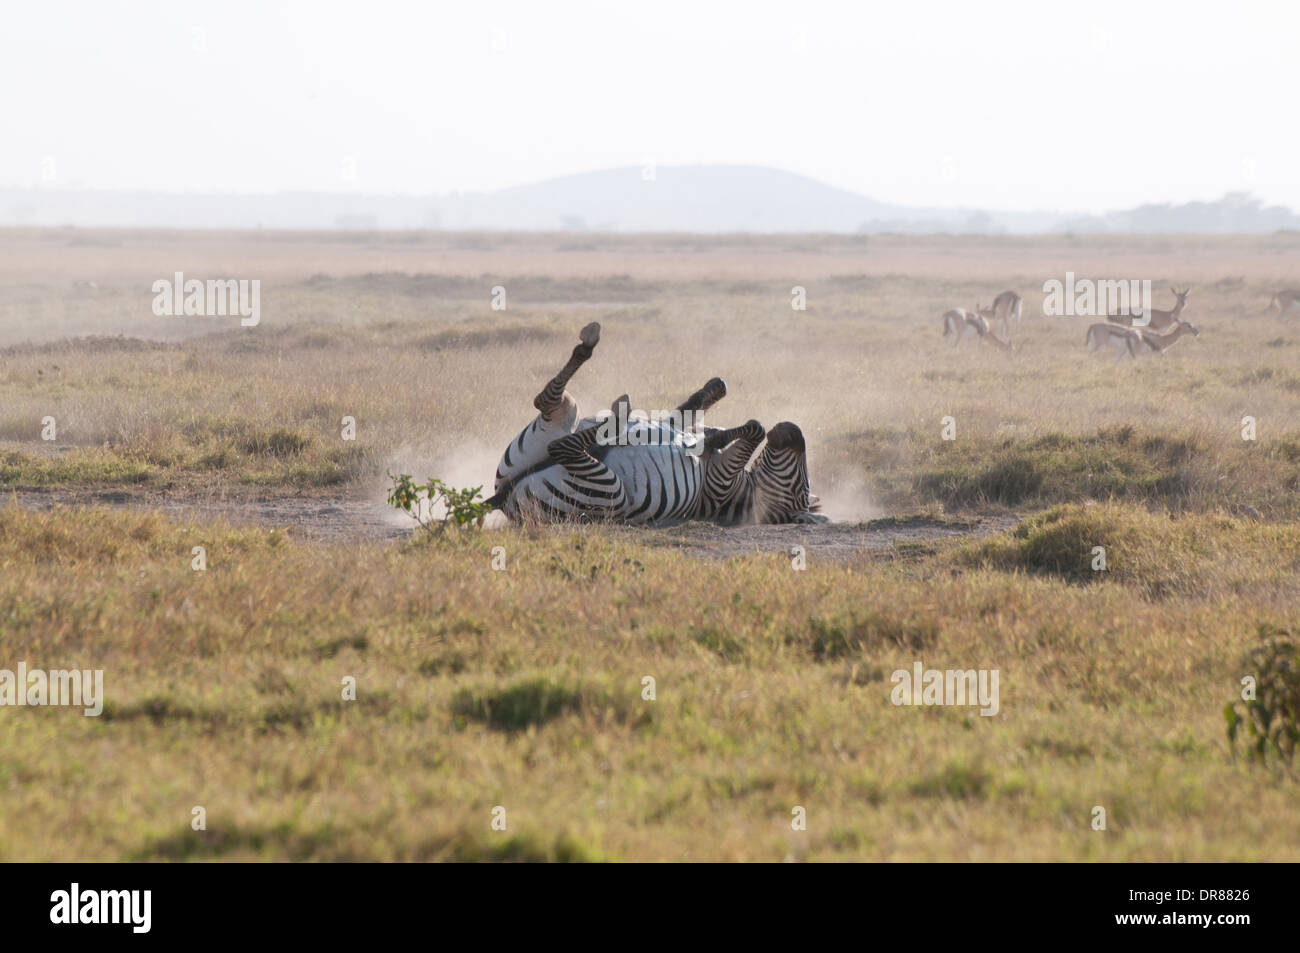 Common Zebra rolling in the dust in Amboseli National Park Kenya East Africa Stock Photo